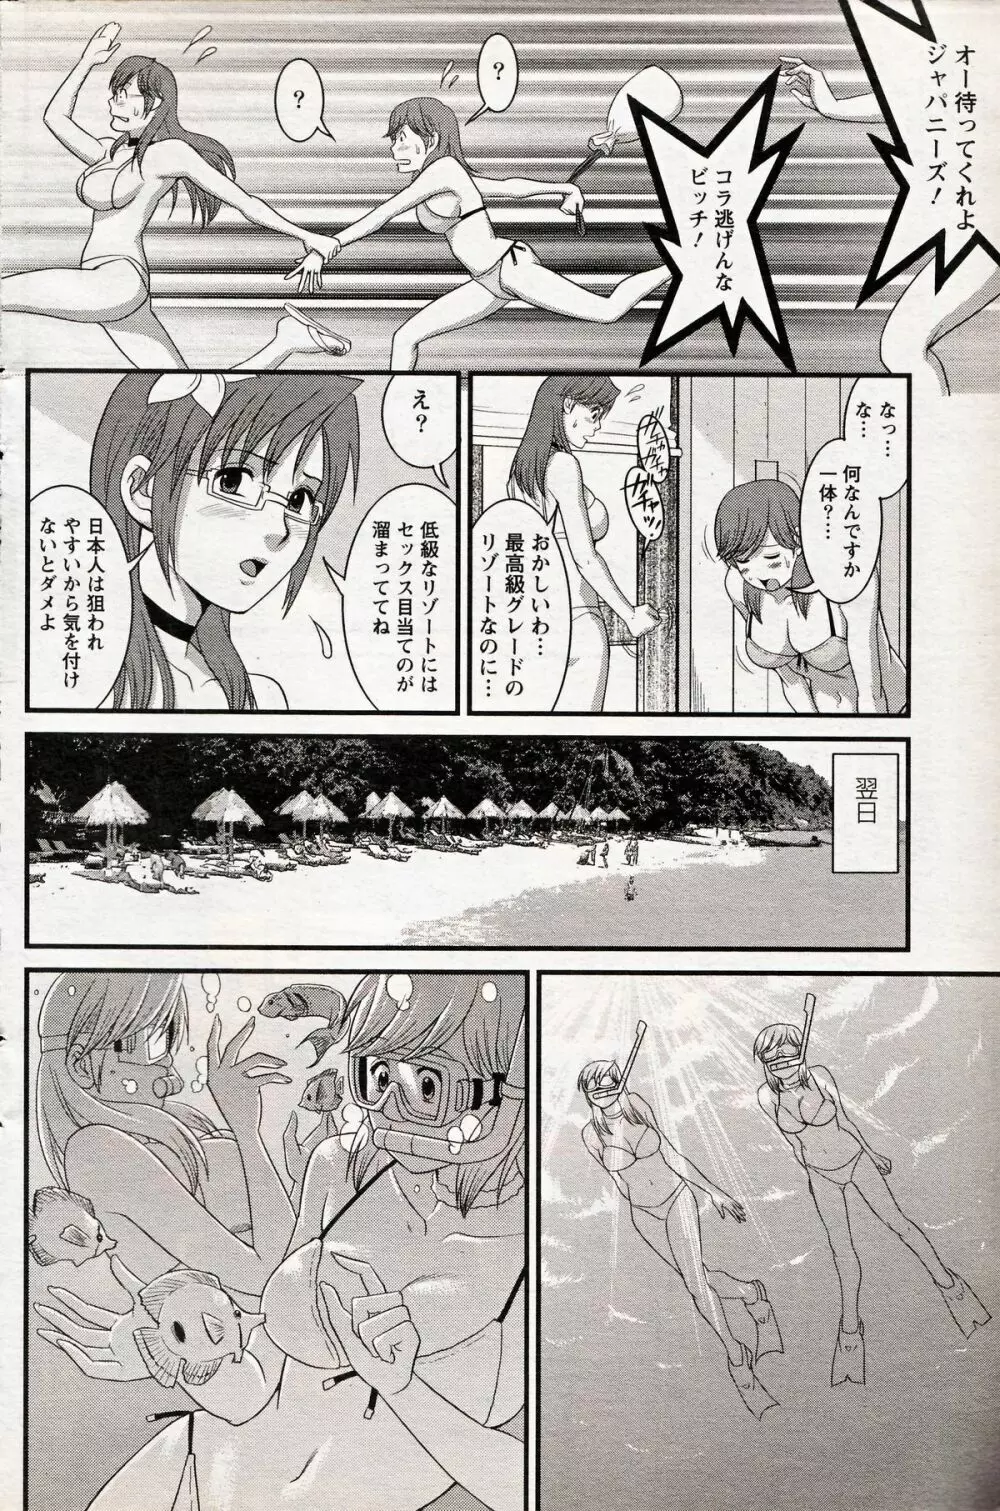 Haken no Muuko-san 16 10ページ